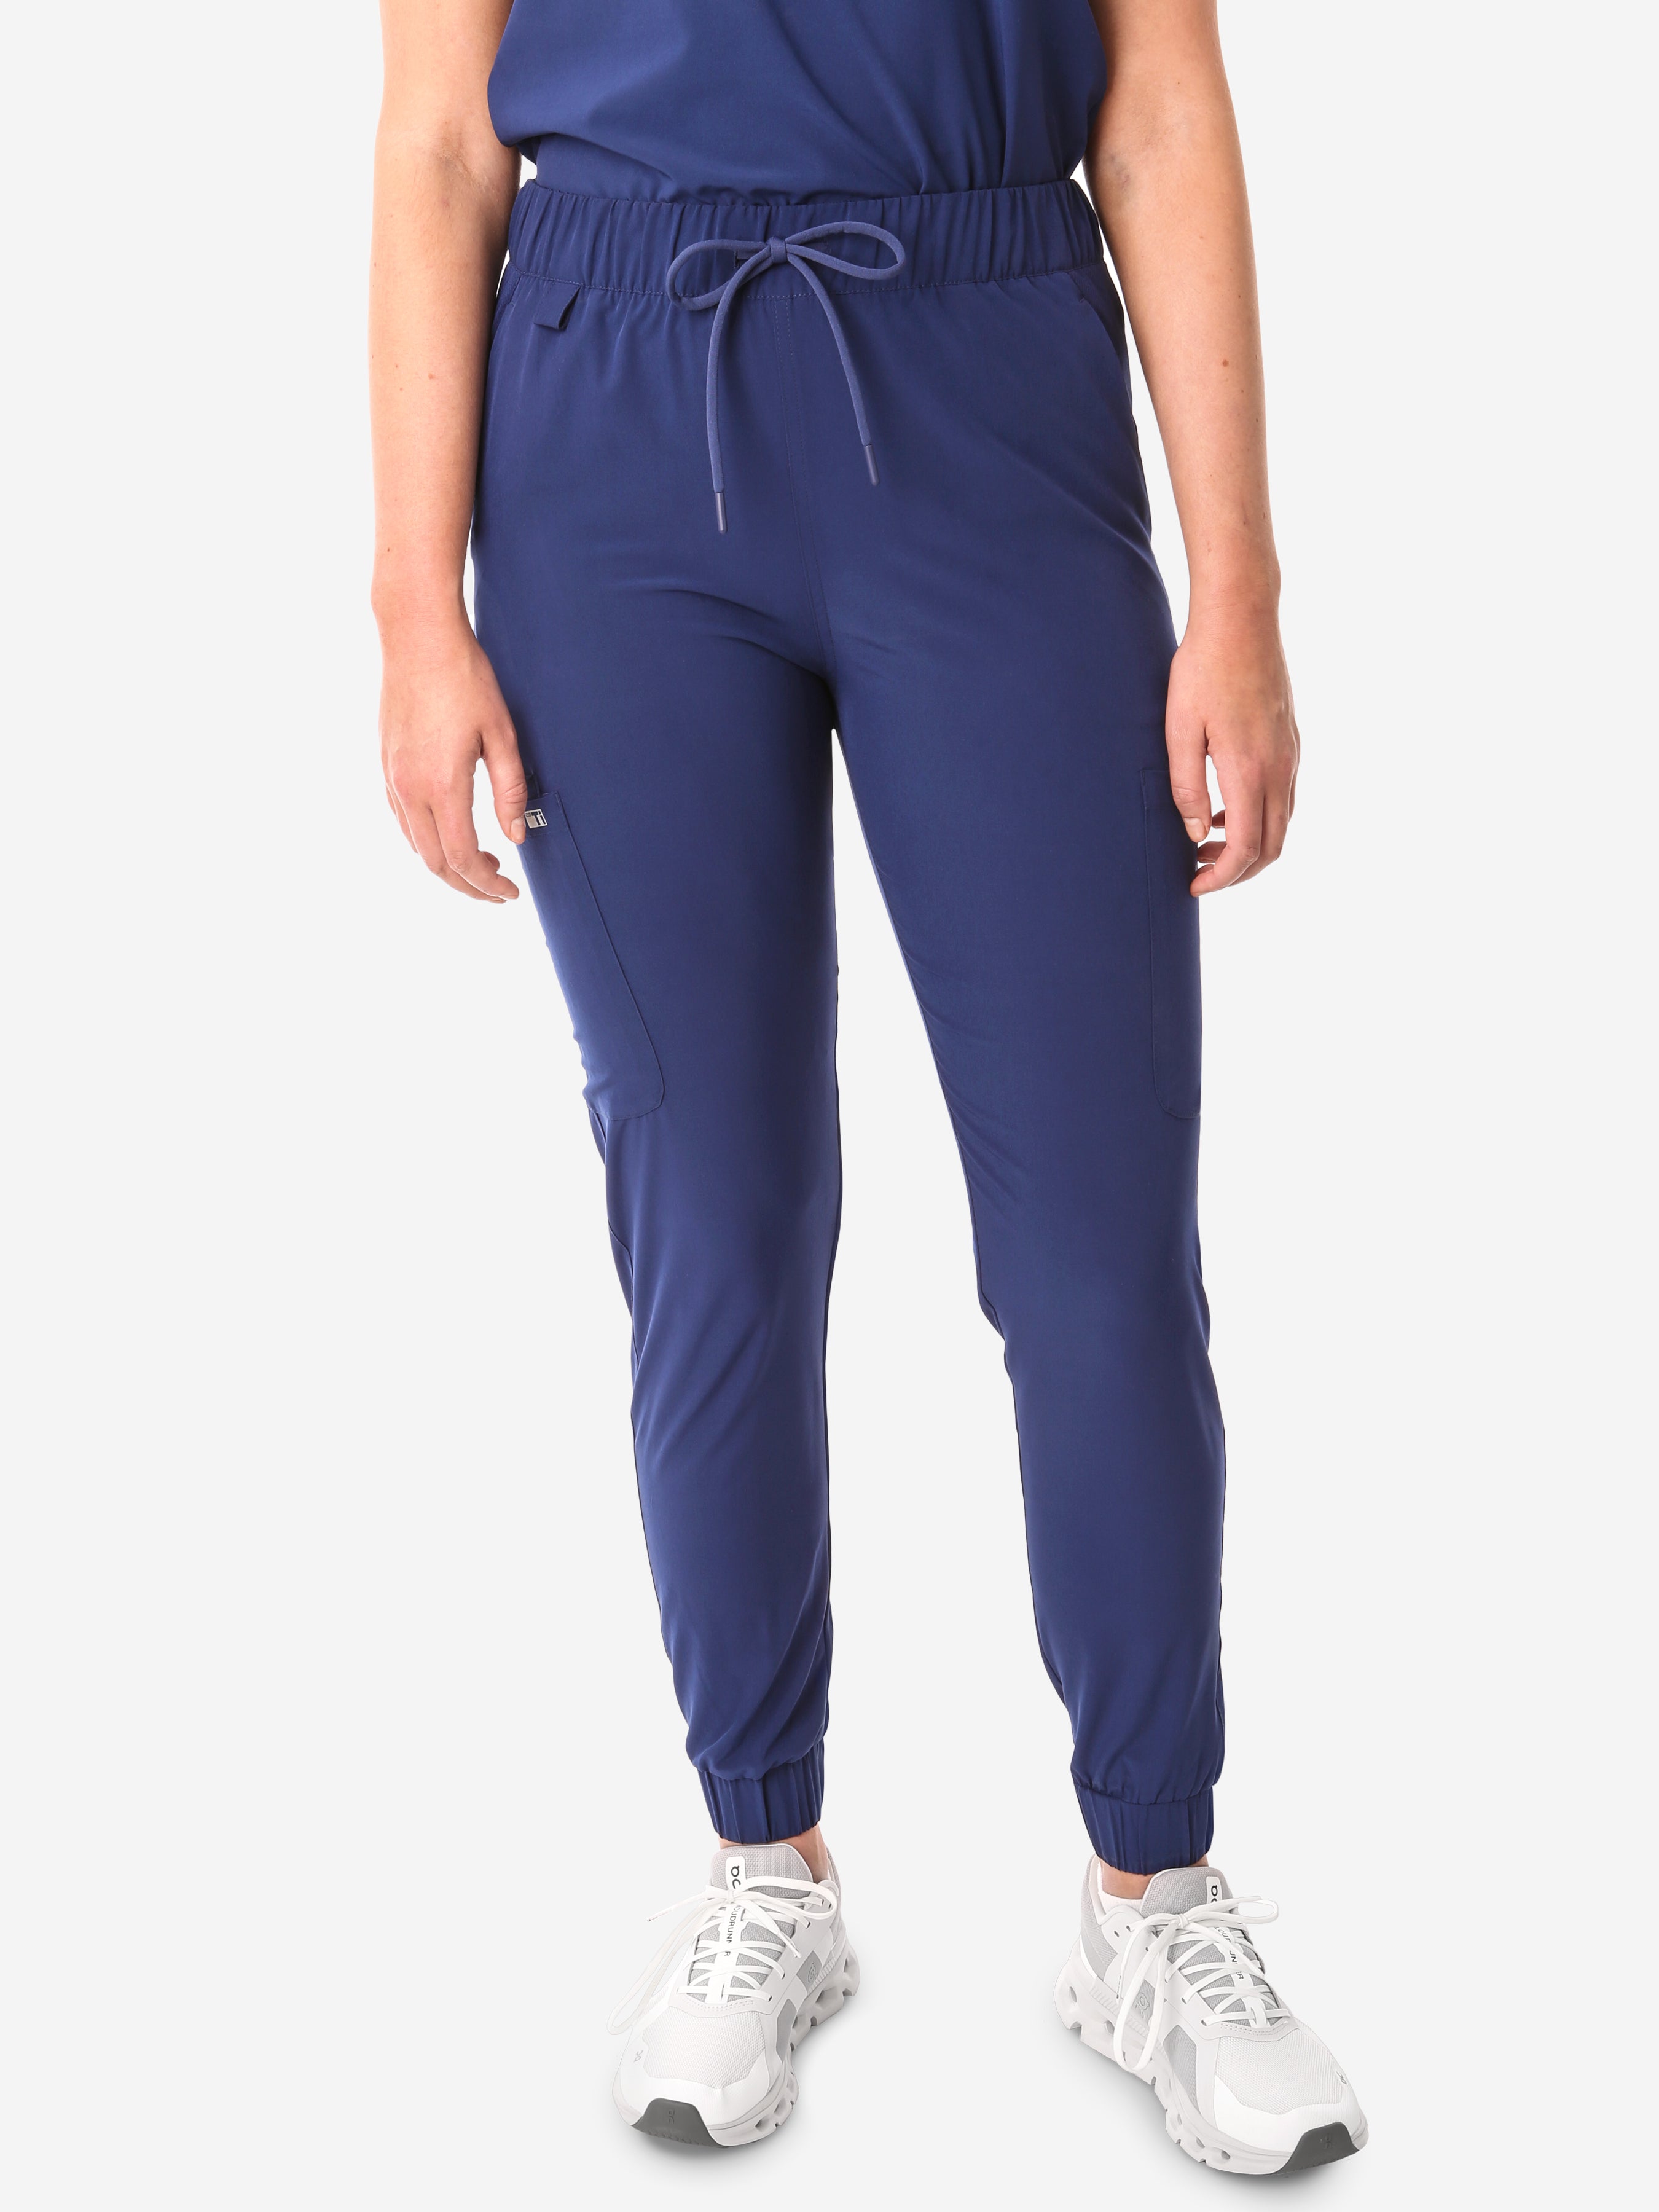 Navy blue jogger pants